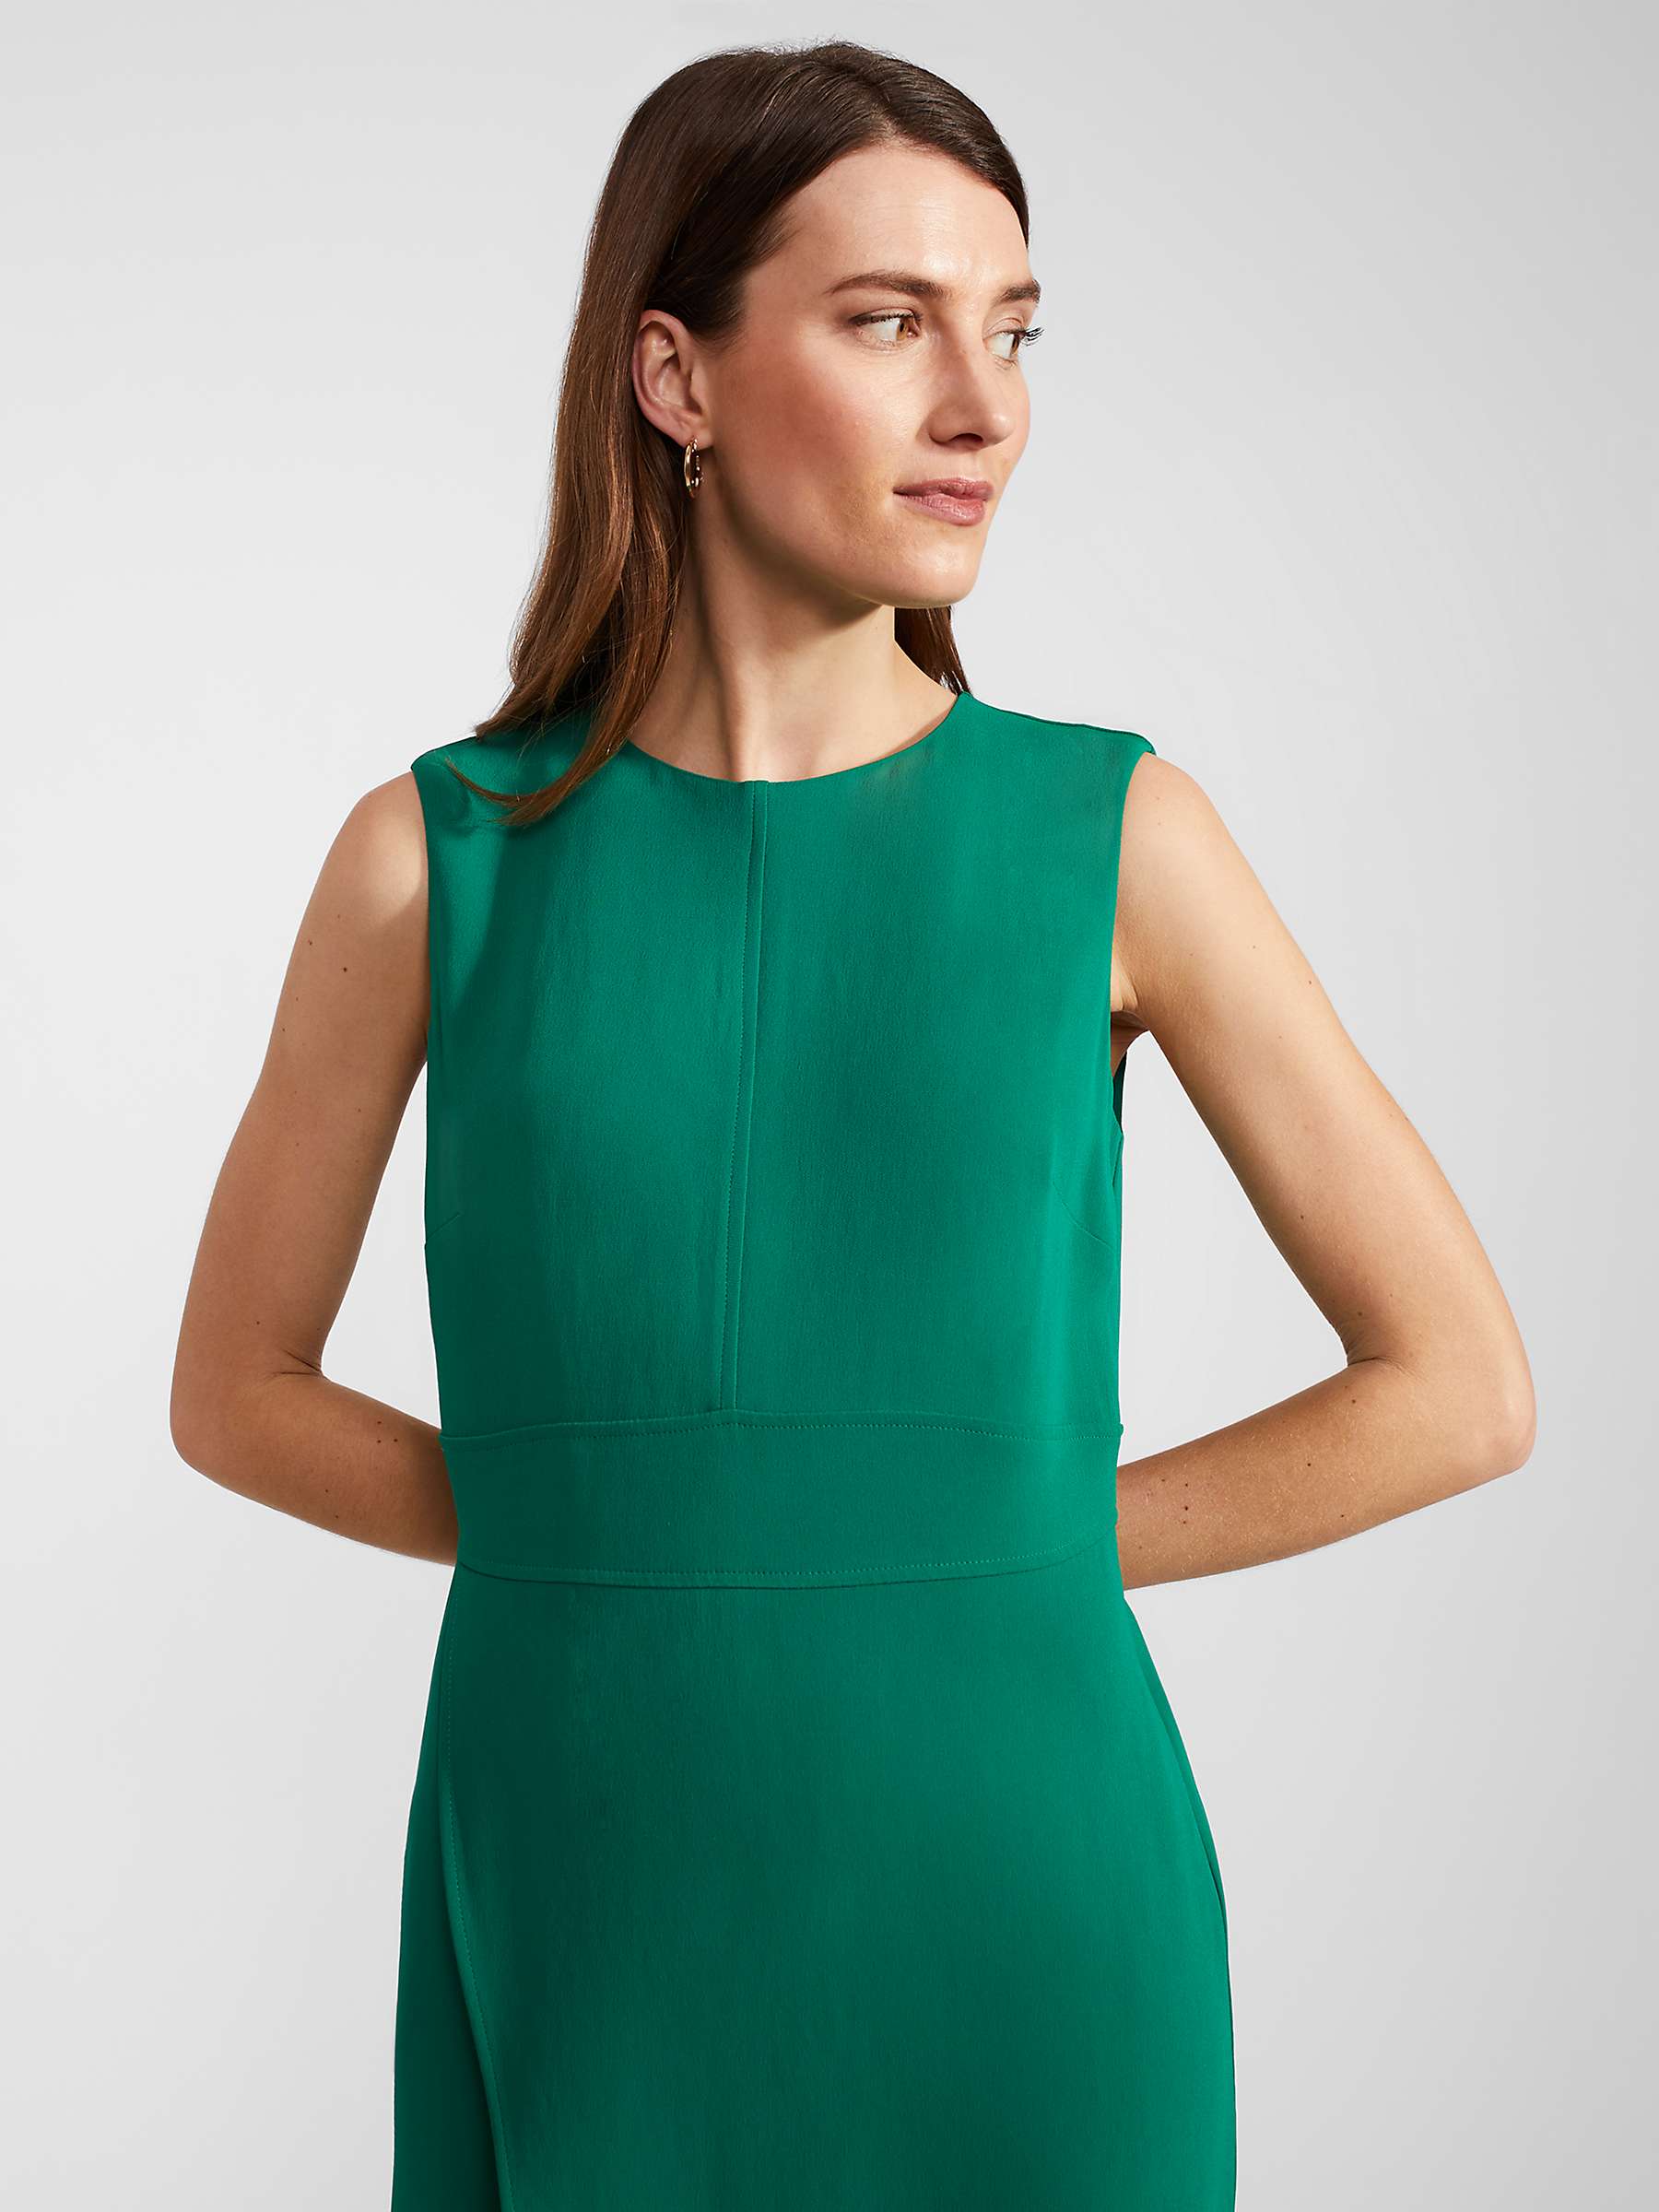 Buy Hobbs Petite Maura Knee Length Dress, Malachite Green Online at johnlewis.com